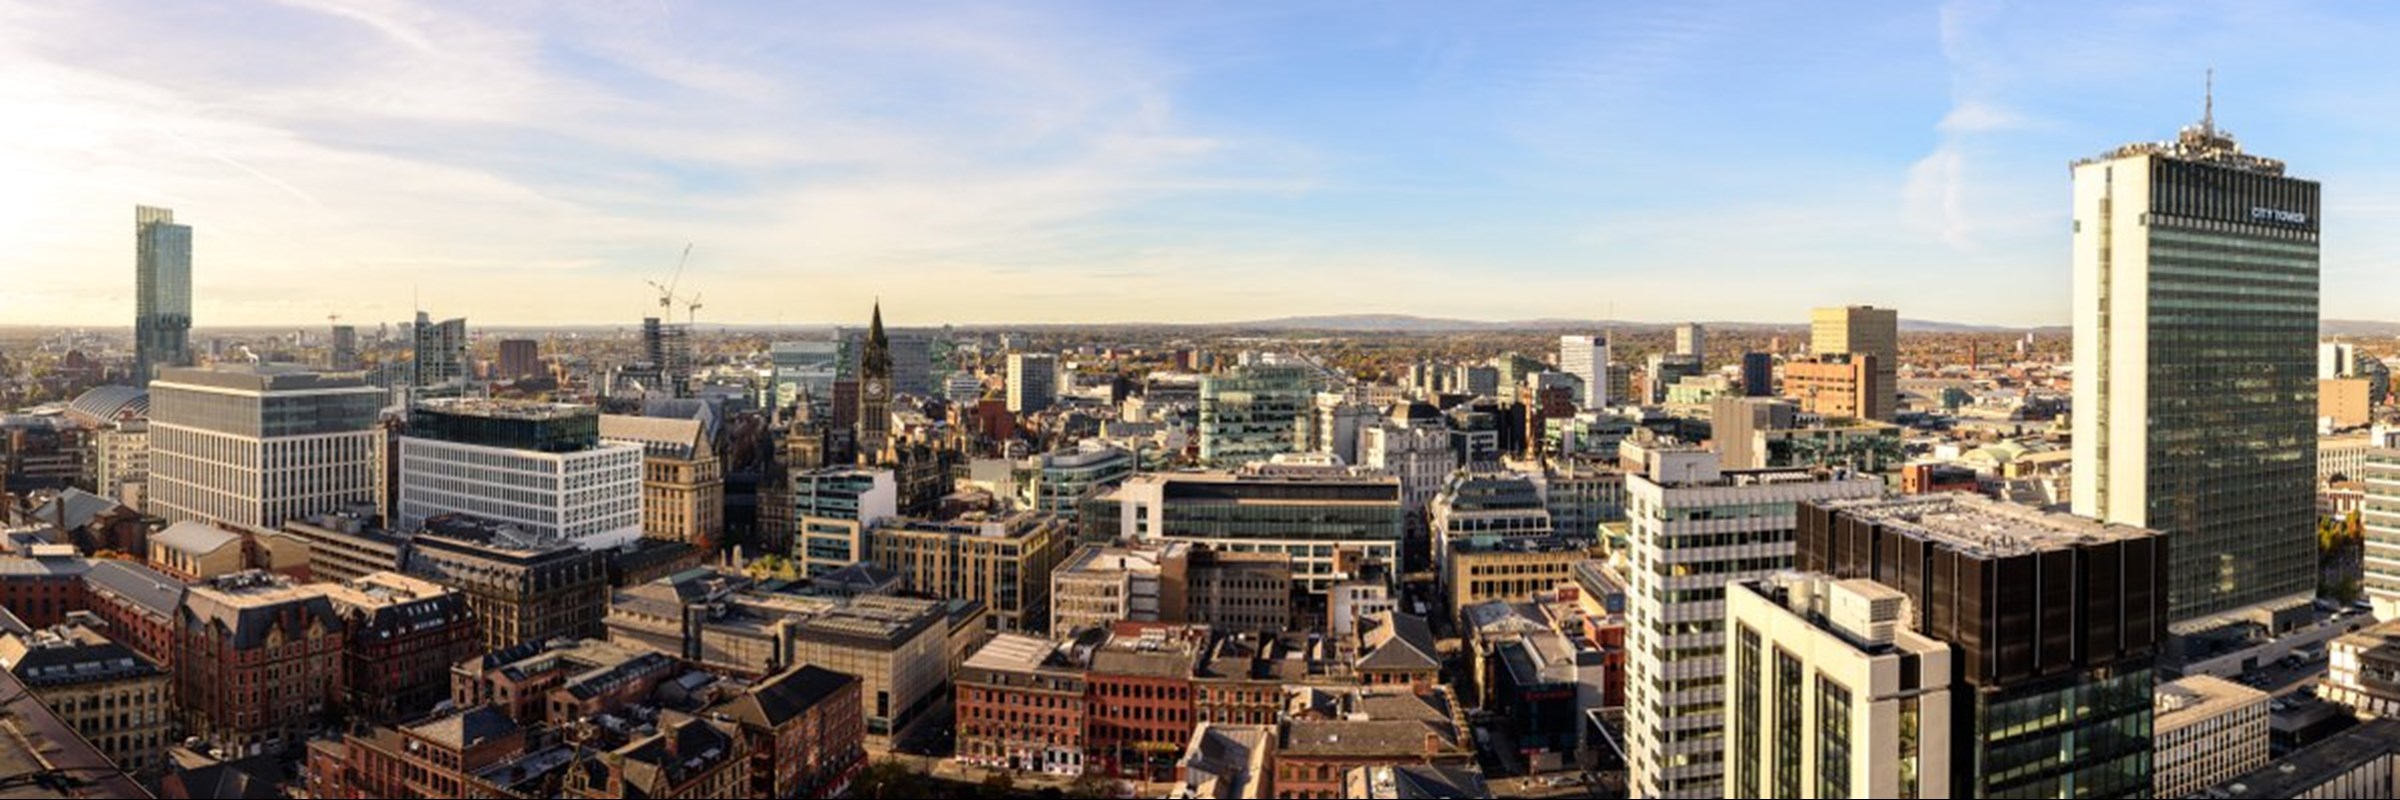 Manchester city centre skyline